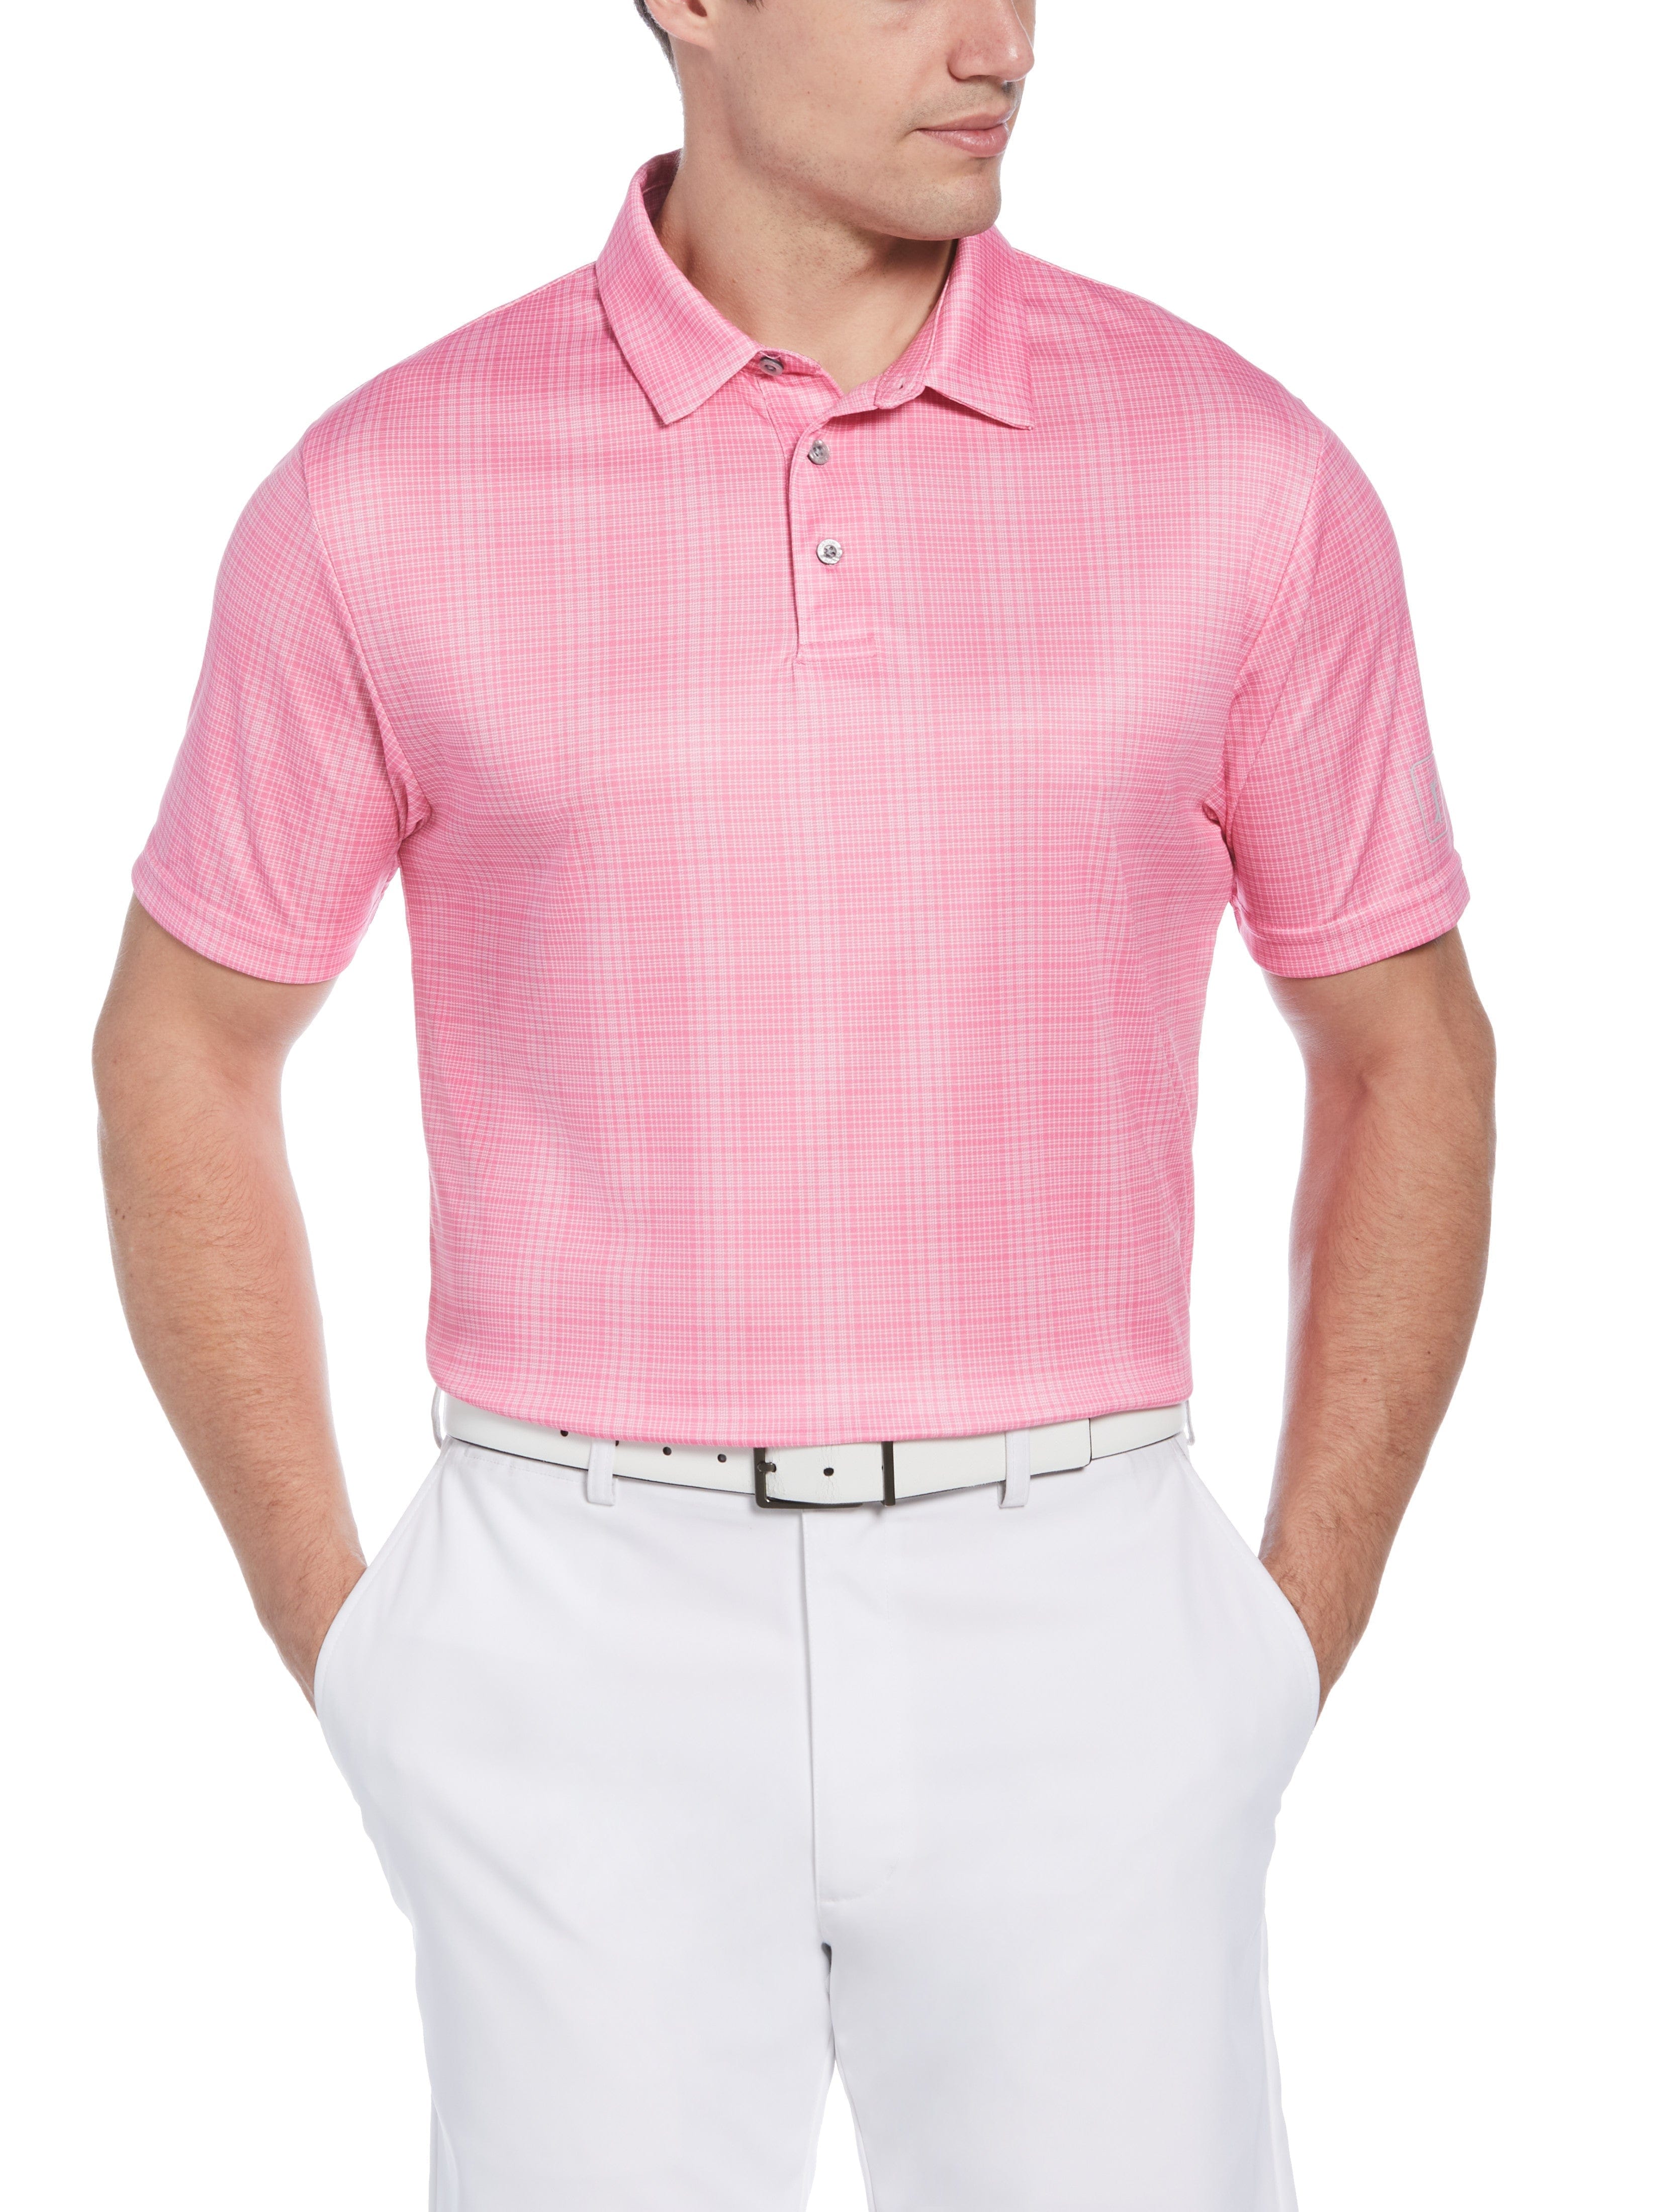 PGA TOUR Apparel Mens Printed Plaid Golf Polo Shirt, Size Medium, Pink Carnation, 100% Polyester | Golf Apparel Shop